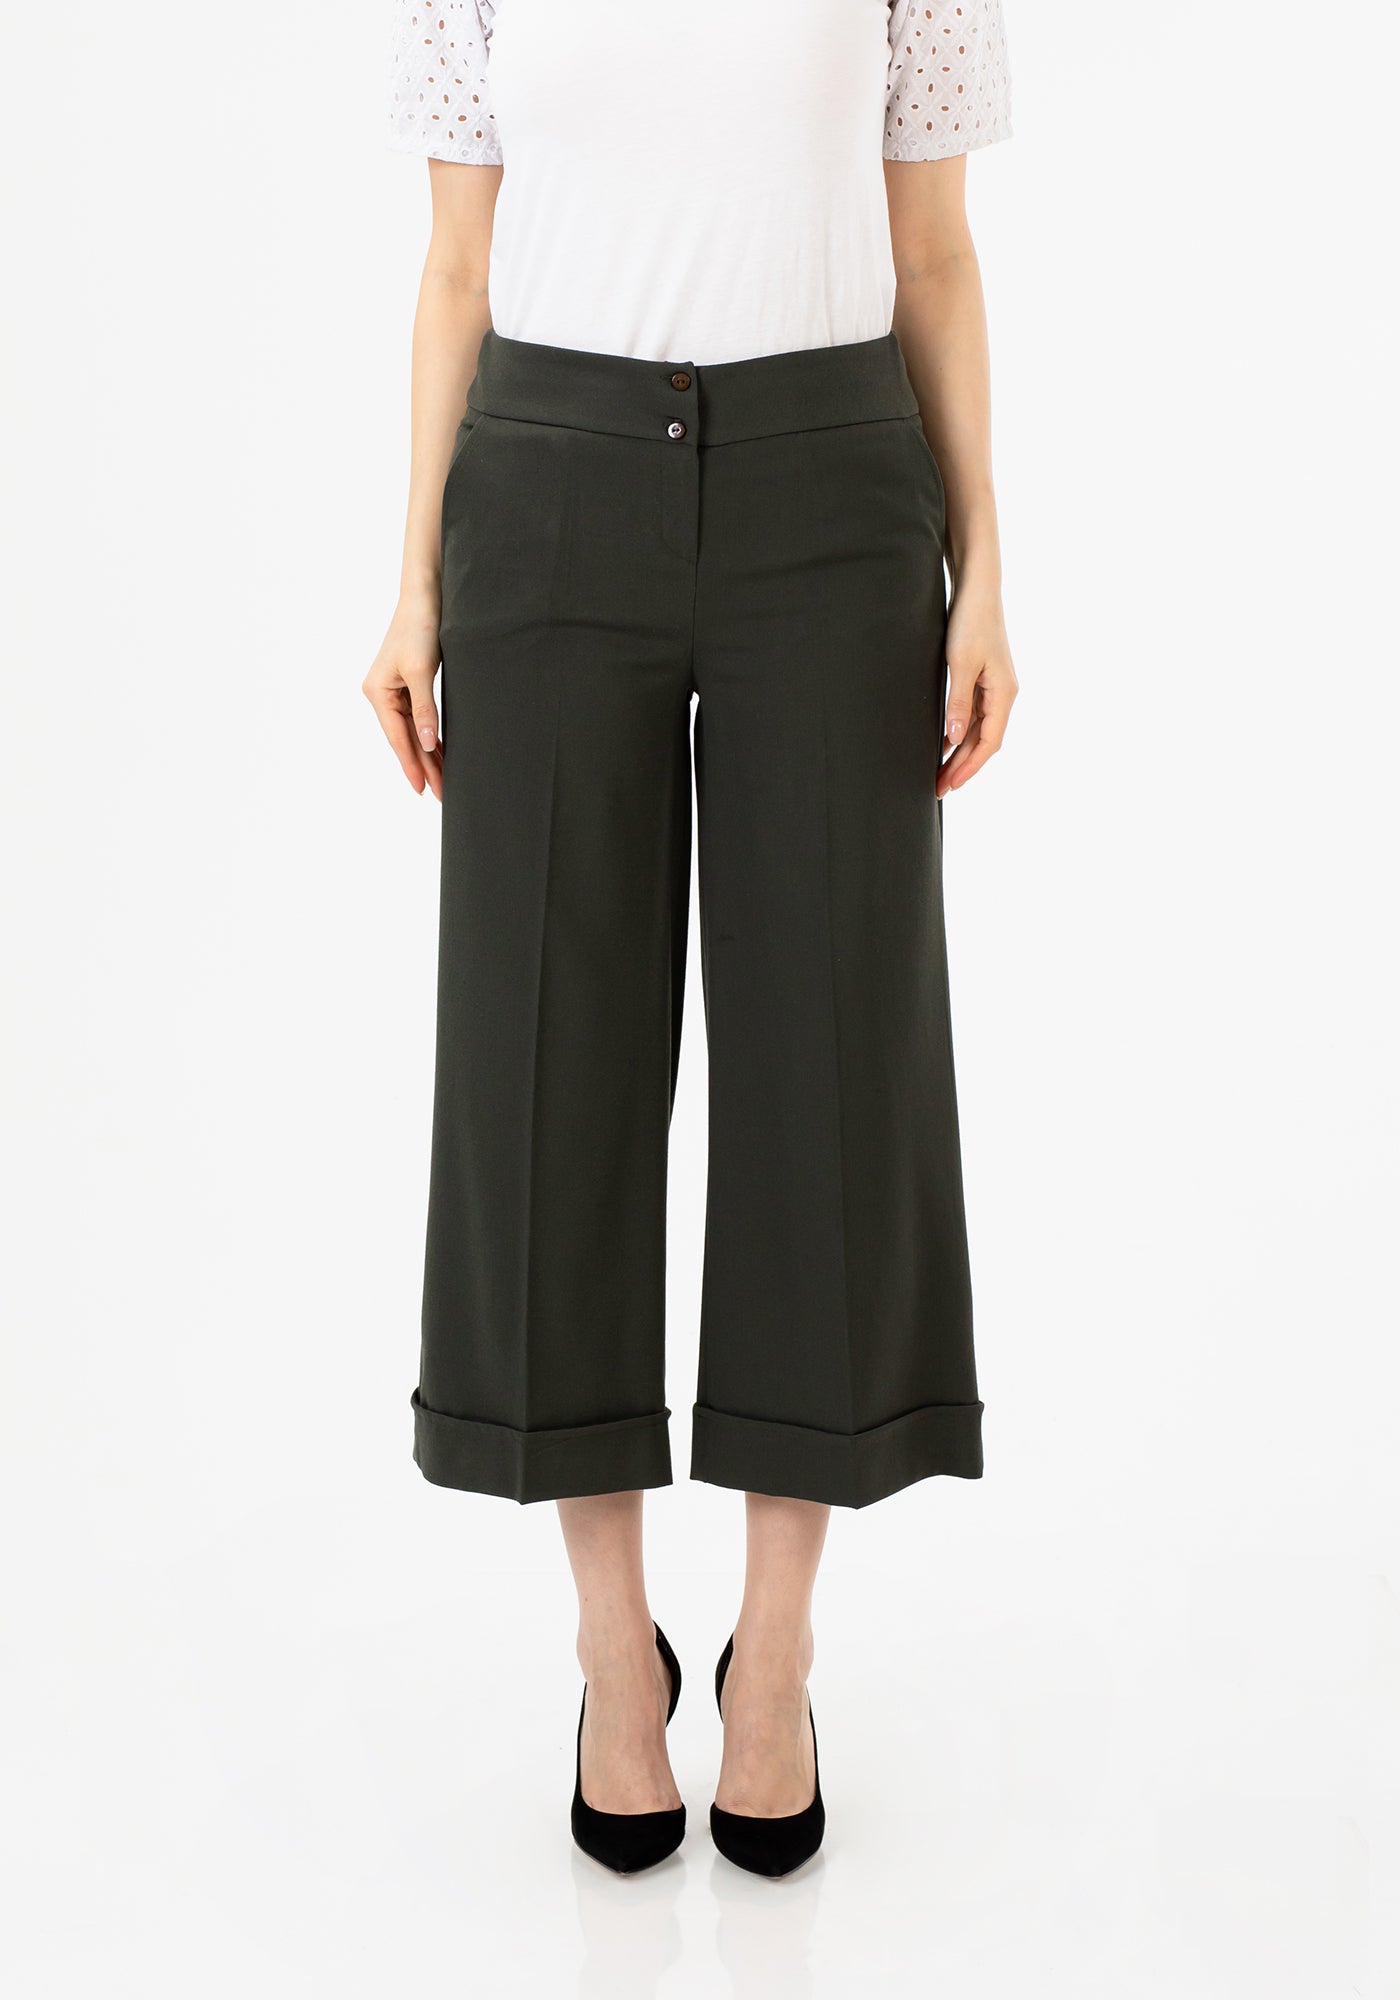 Khaki Dress Pants for Women Wide Leg High Waist Cropped Pants G-Line